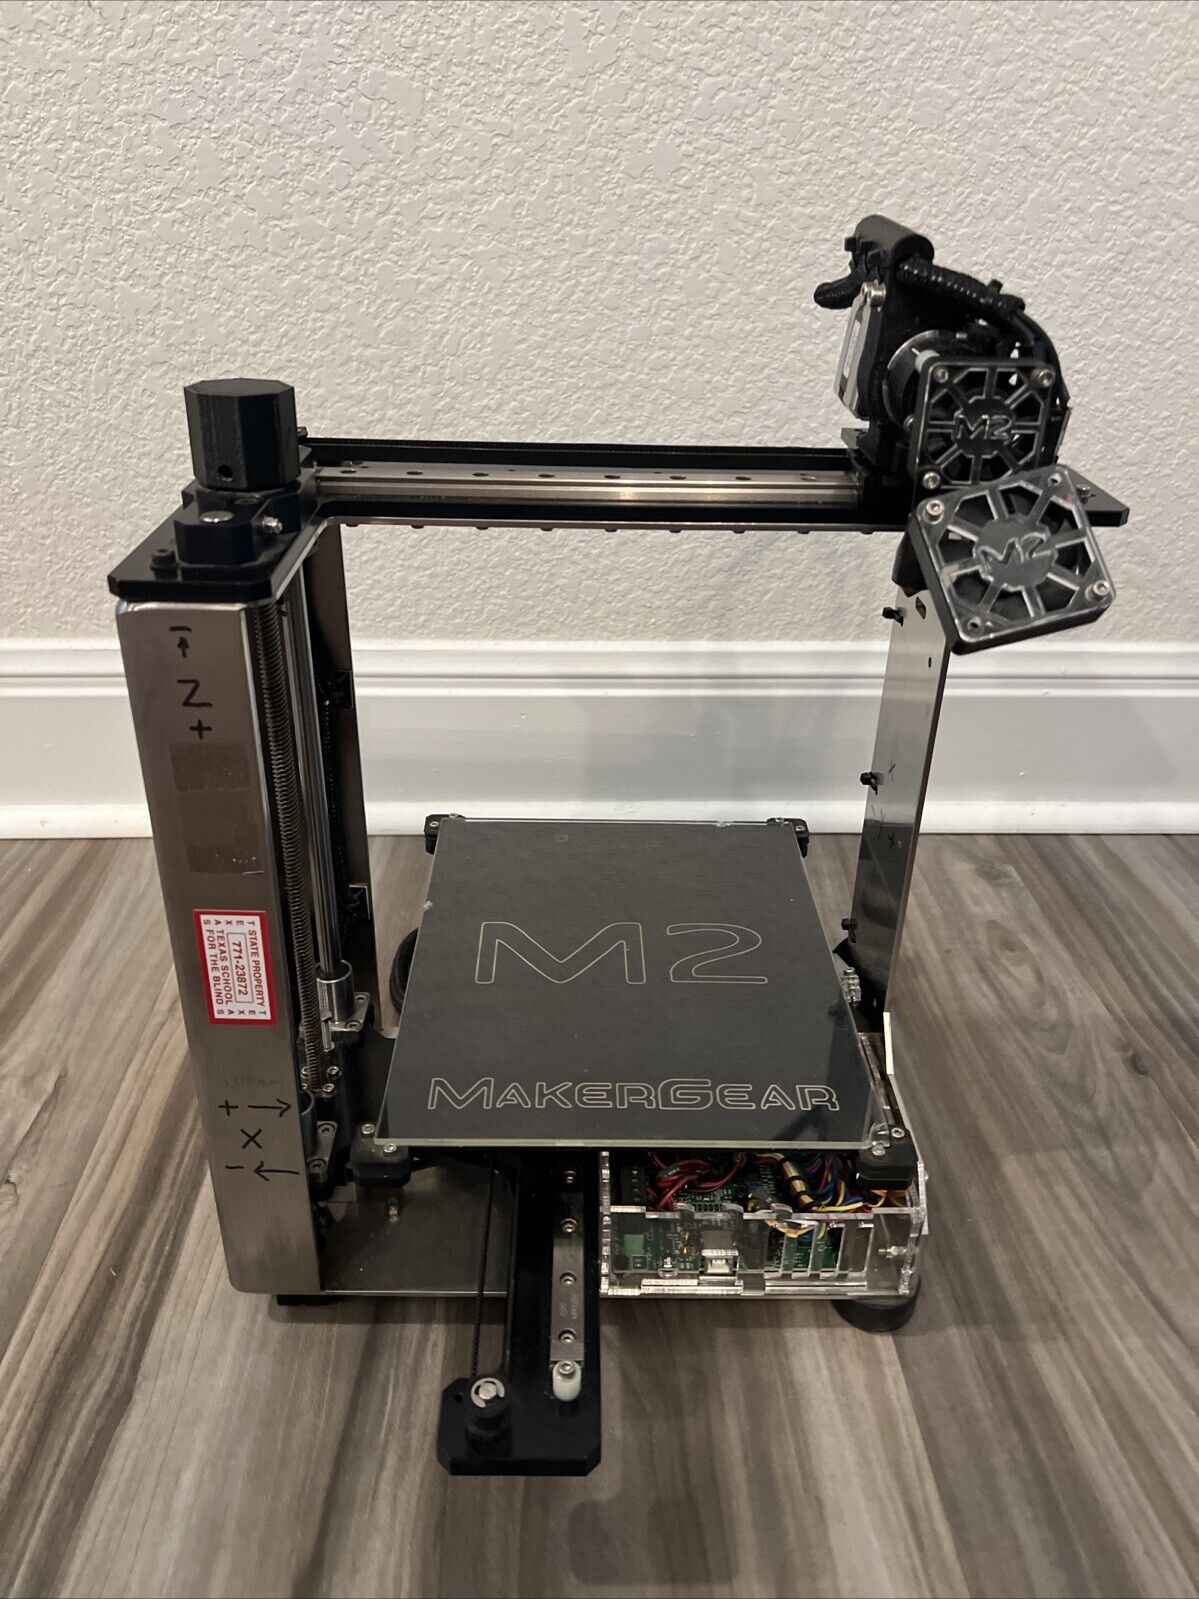 MakerGear M2 Desktop 3D Printer *FOR PARTS*